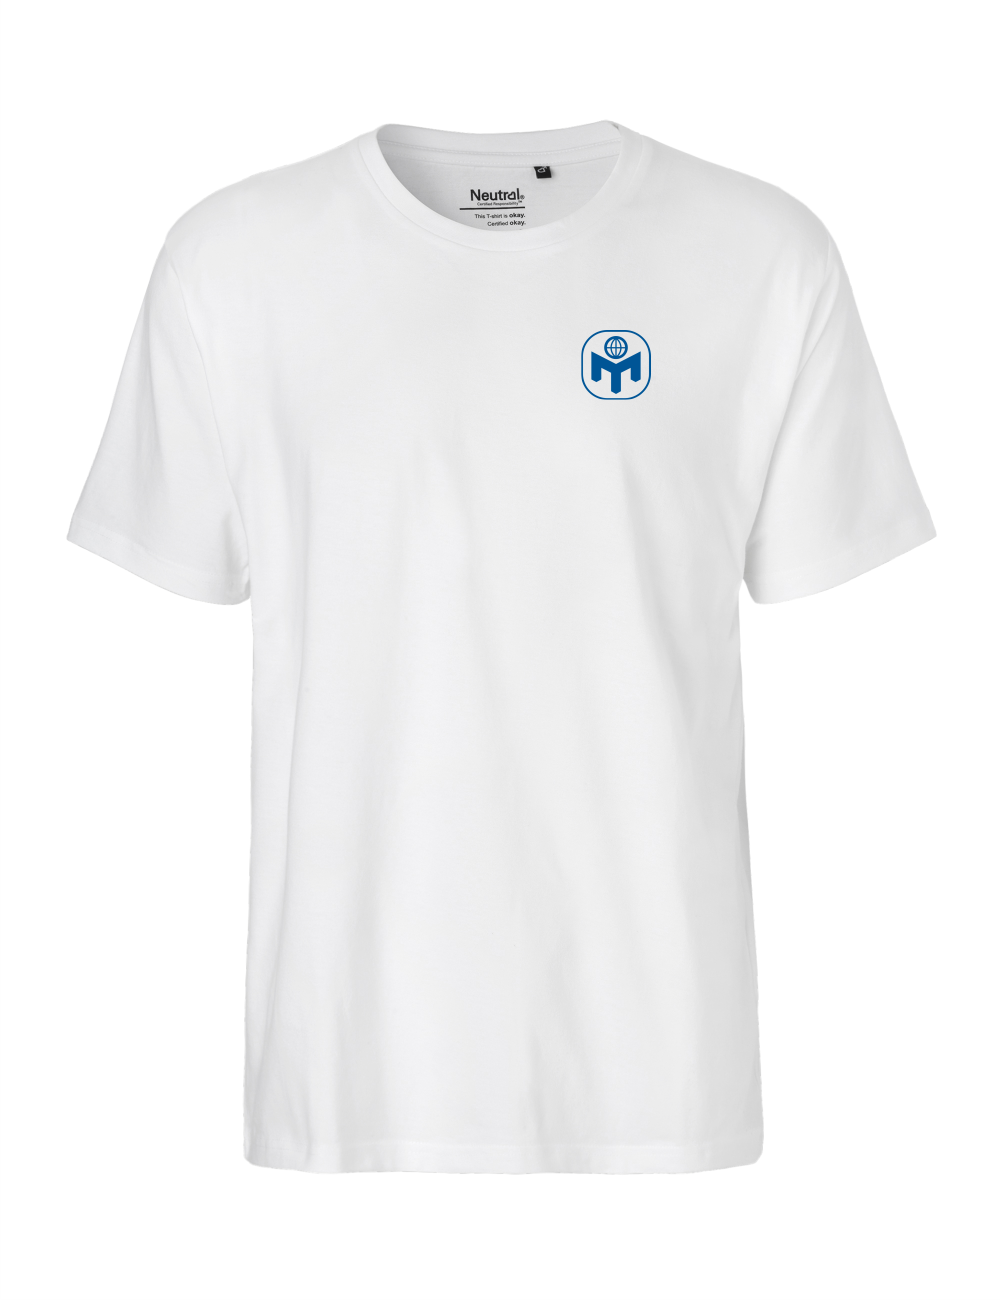 T-Shirt Herren "Mblem" Premium